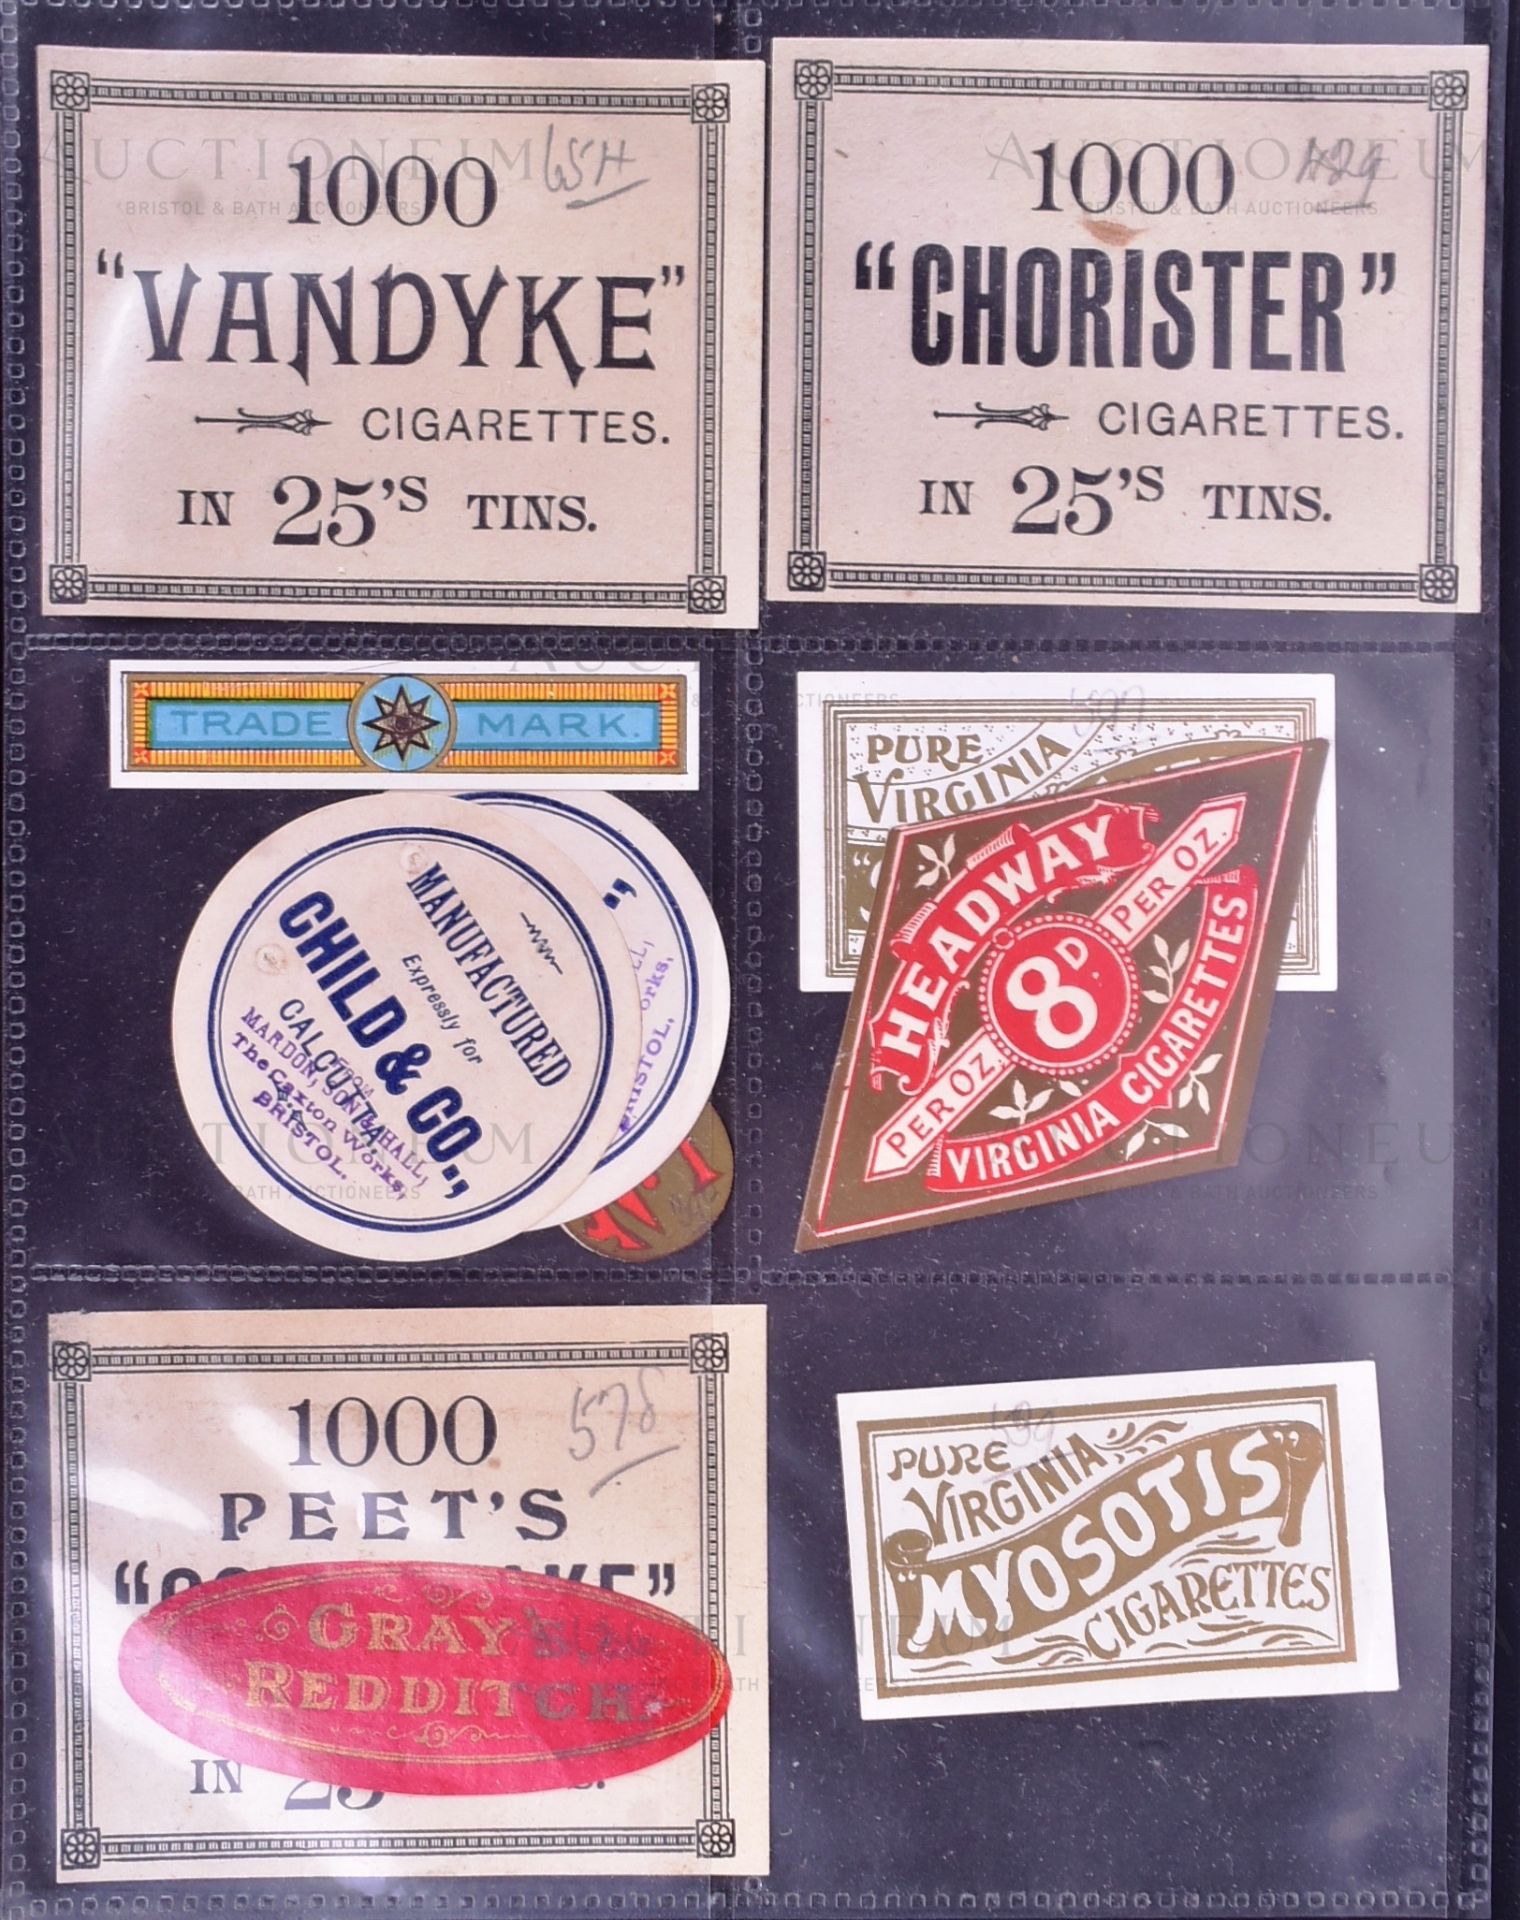 CIGARETTE PACKETS - ALBUM OF VINTAGE CIGARETTE PACKS - Image 16 of 16